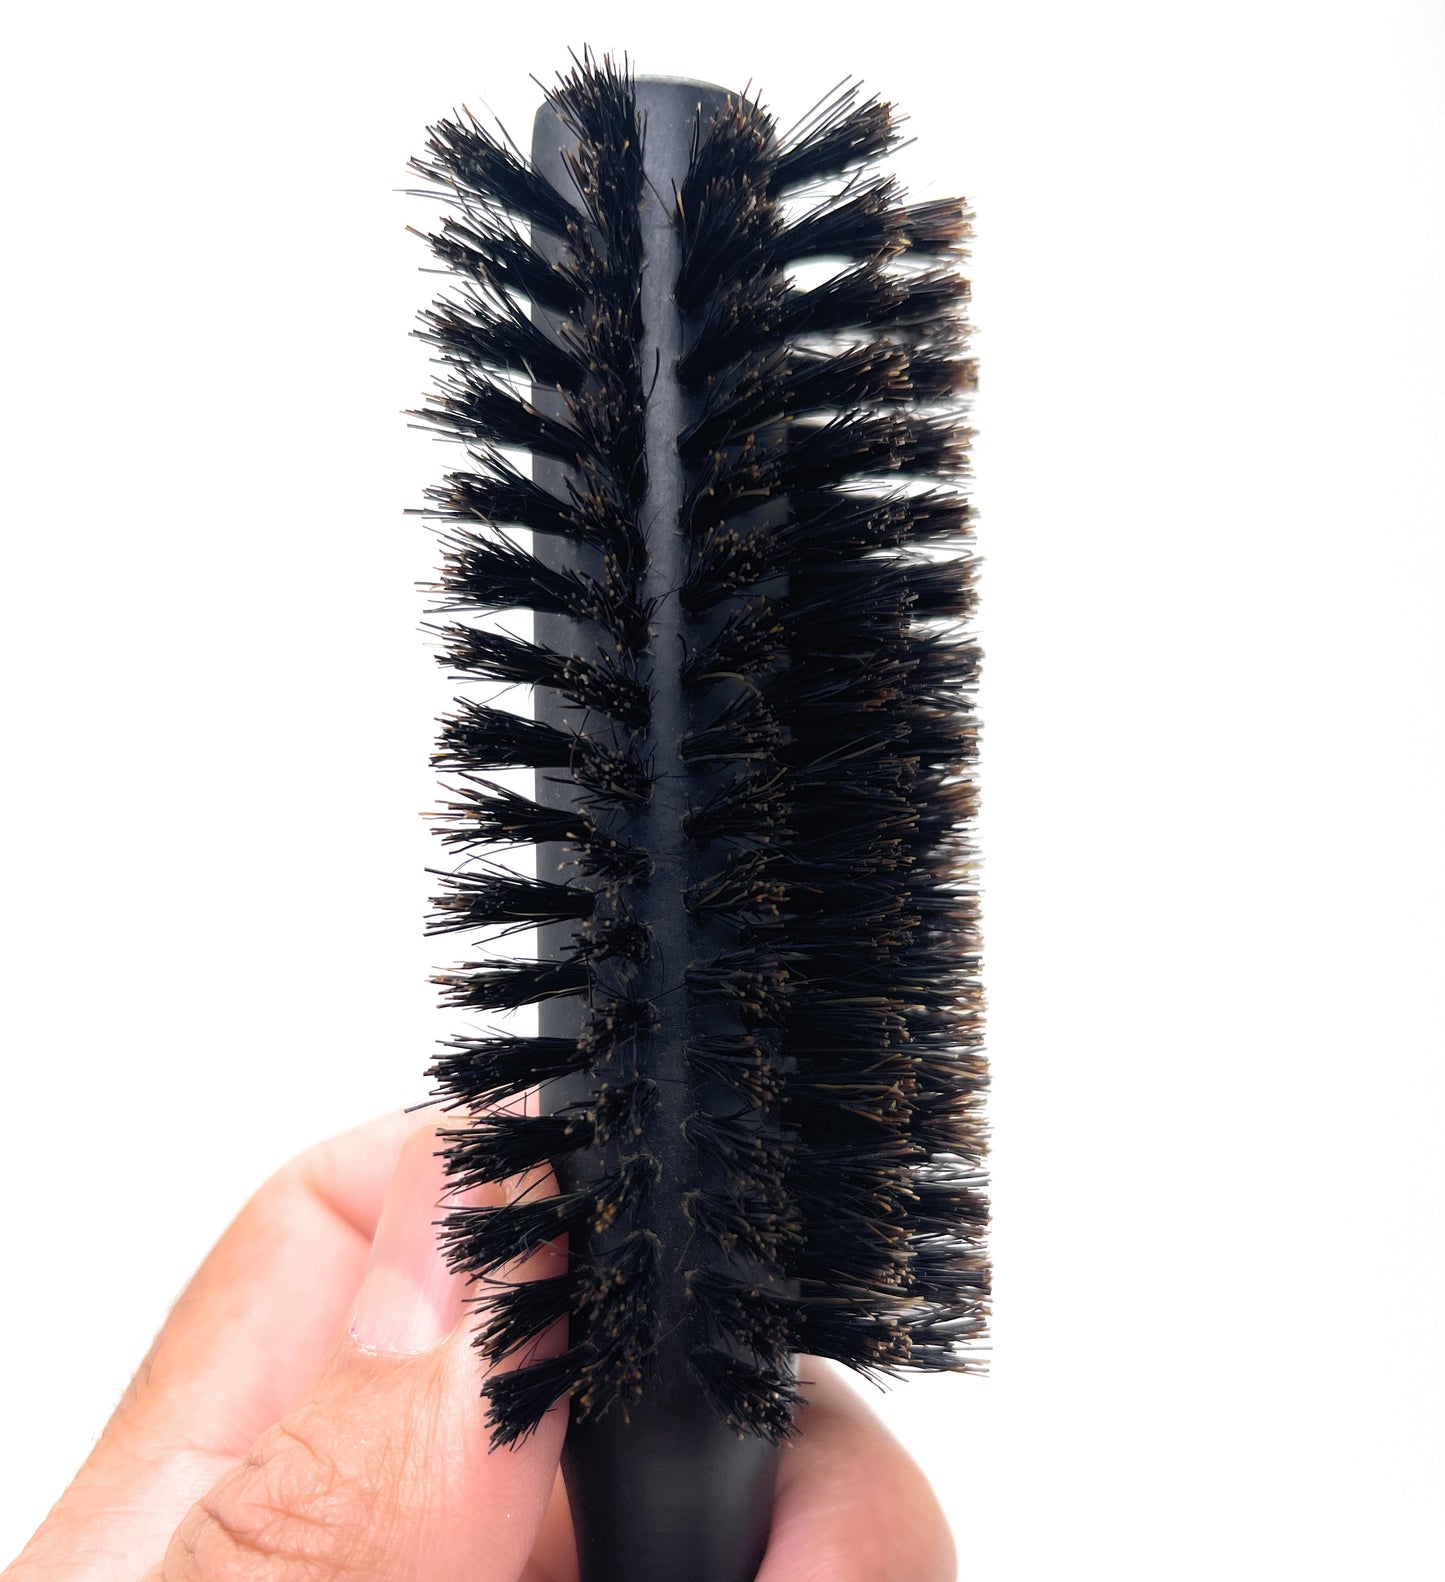 Scalpmaster 8-Rows Half-Round Styling Brush 100% Boar Bristles Wood Handle For Hair Shine Enhancer 1 Pc.